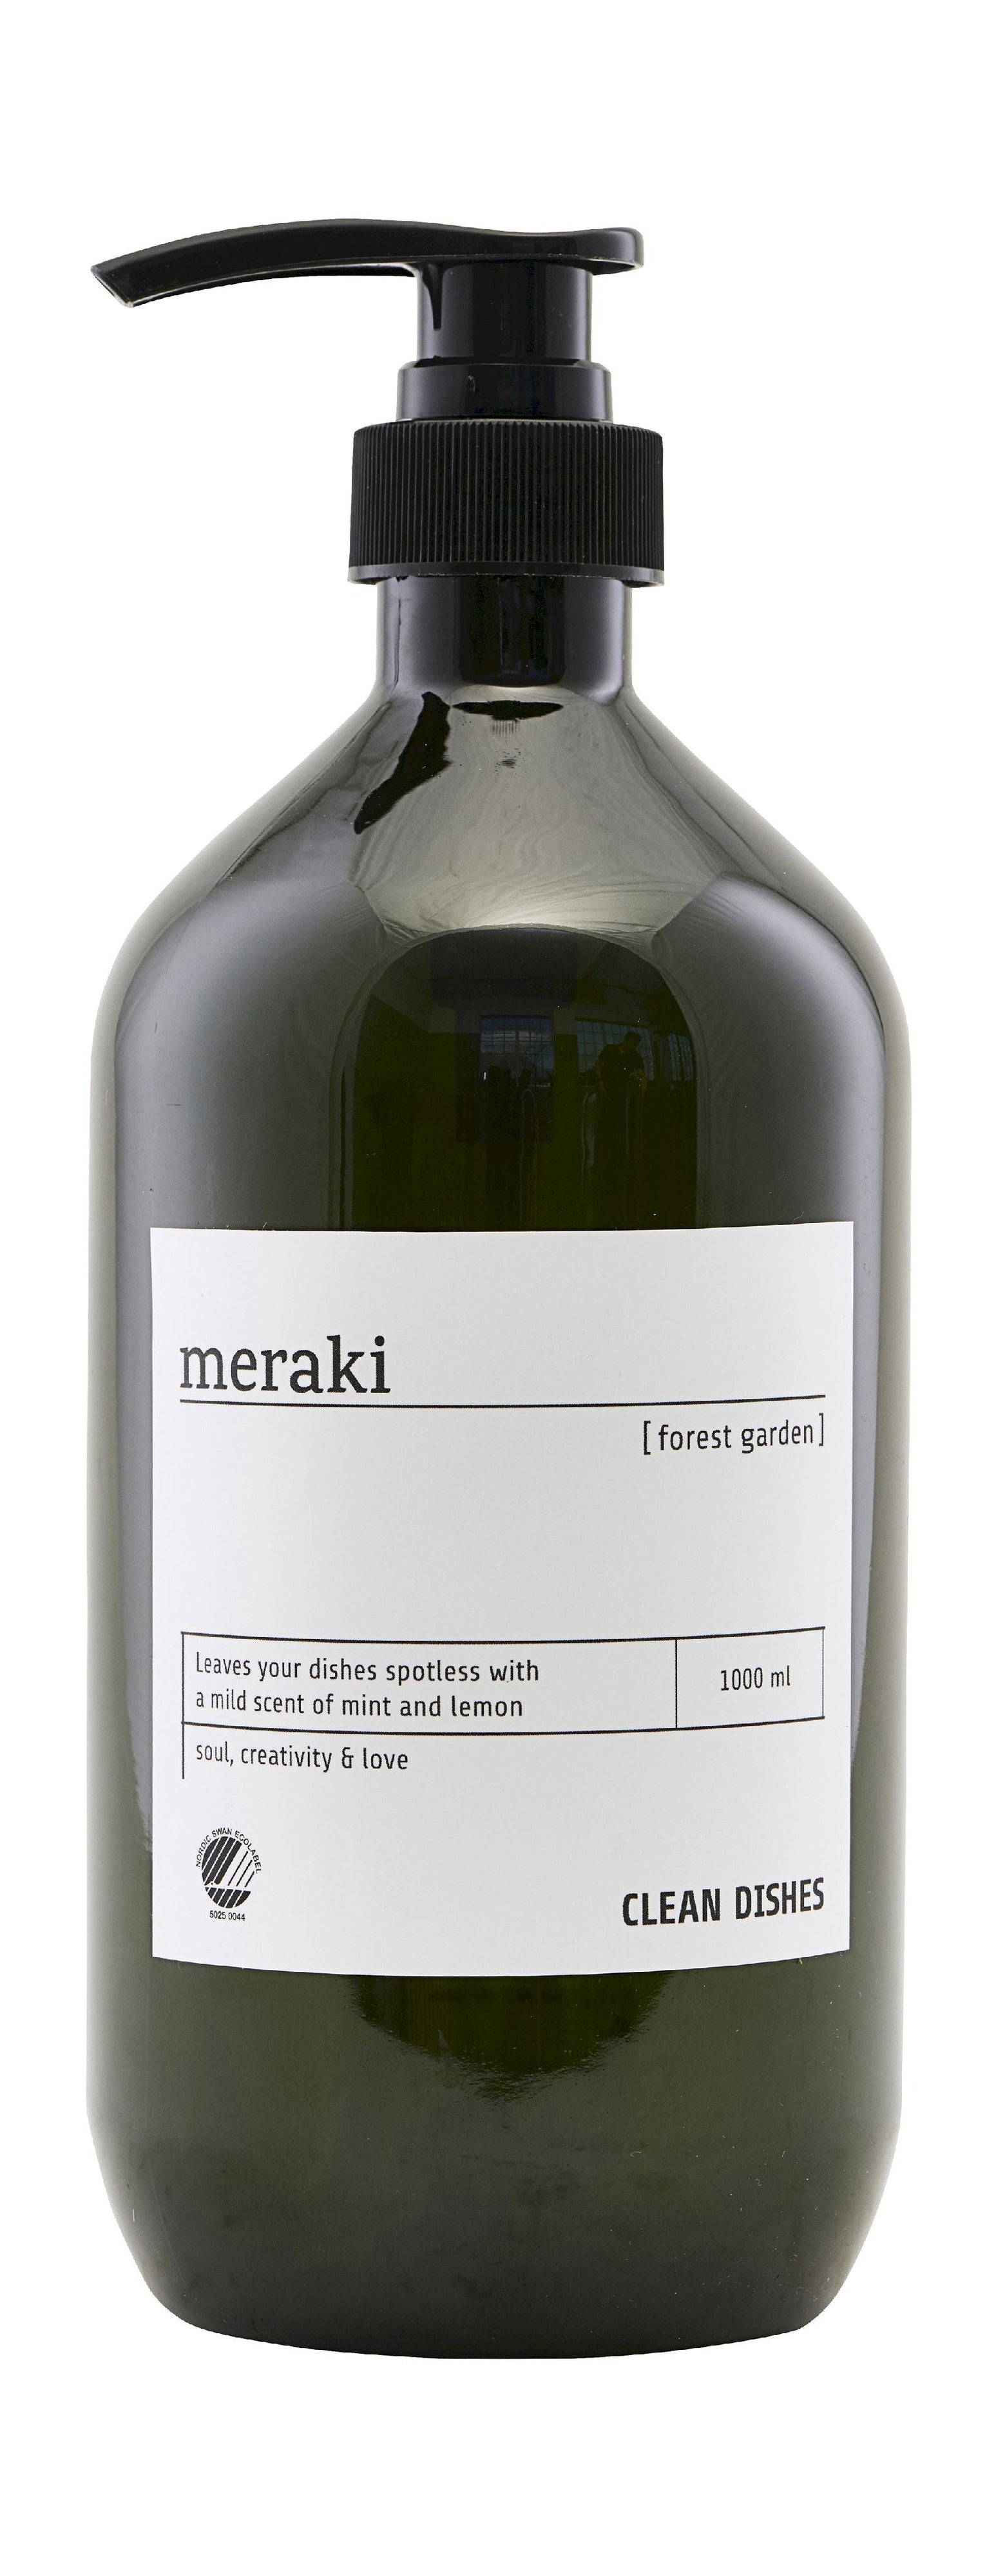 Detergente Meraki 1000 ml, giardino forestale